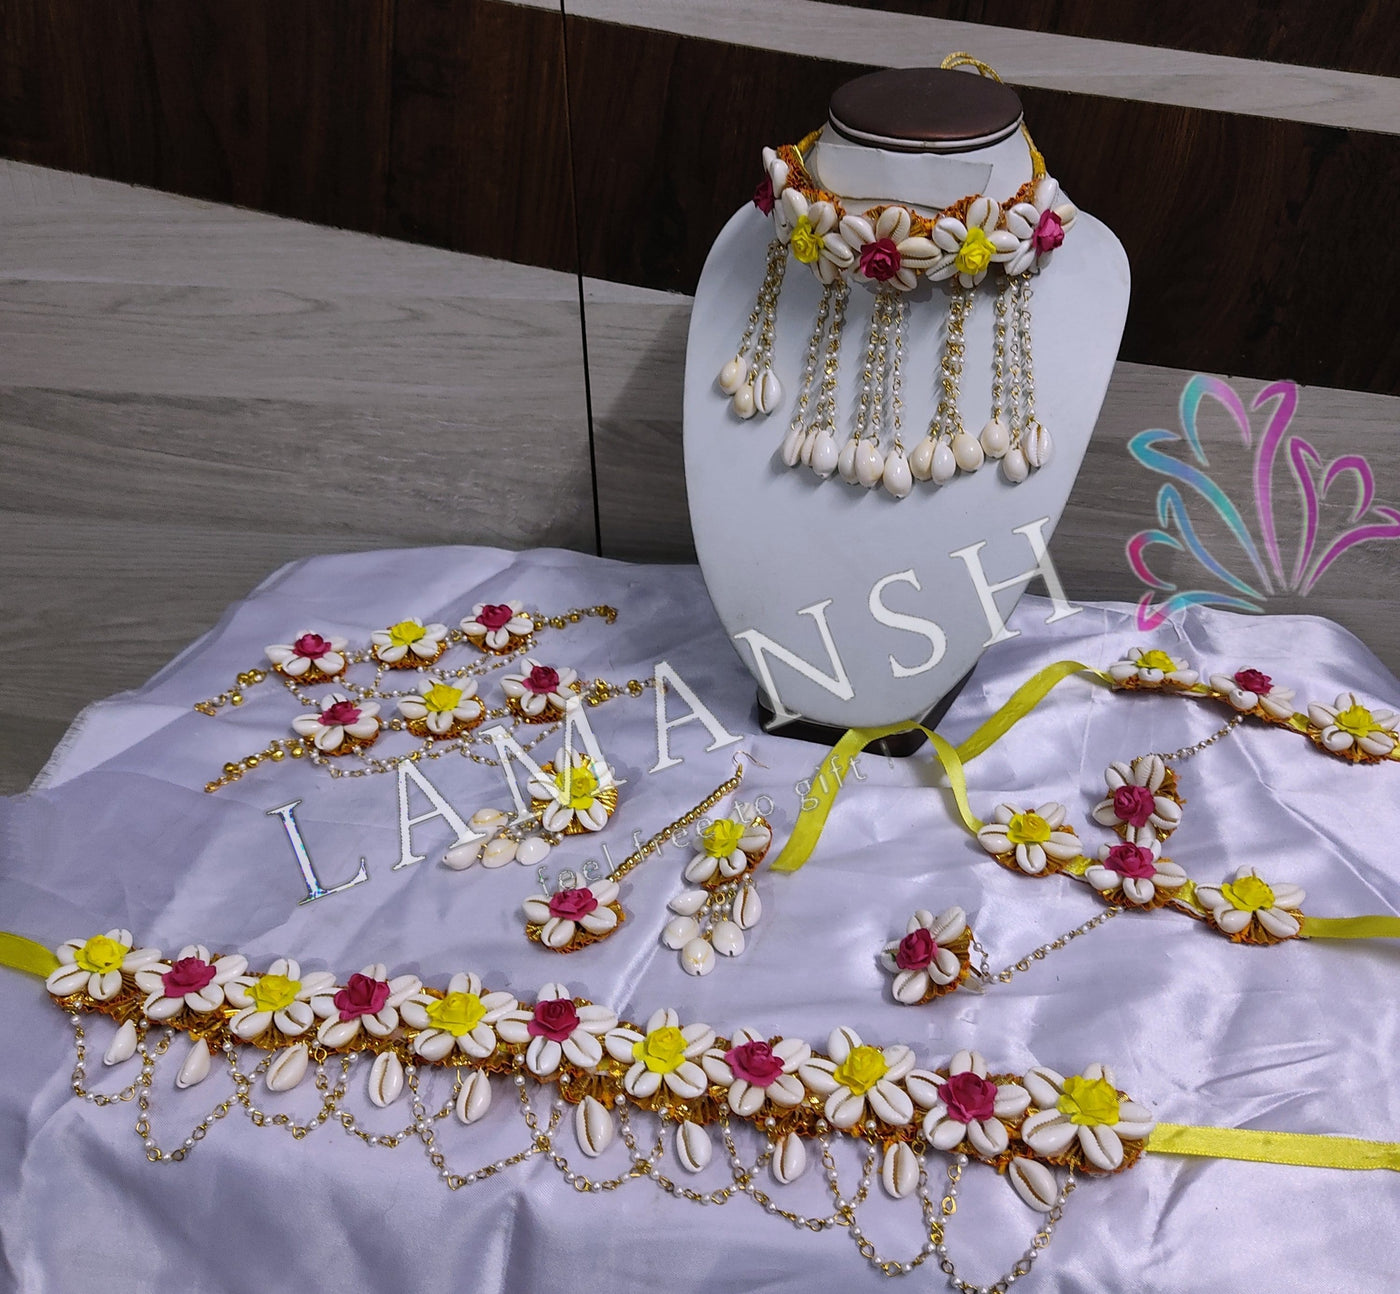 LAMANSH Flower Jewellery Yellow-White-Pink / Standard / Shells 🐚 Style Lamansh® Floral Shells 🐚 Collection Jewellery Set 🌺🌻🌹🌷 / Haldi Set with Kamarband / Flower jewellery set